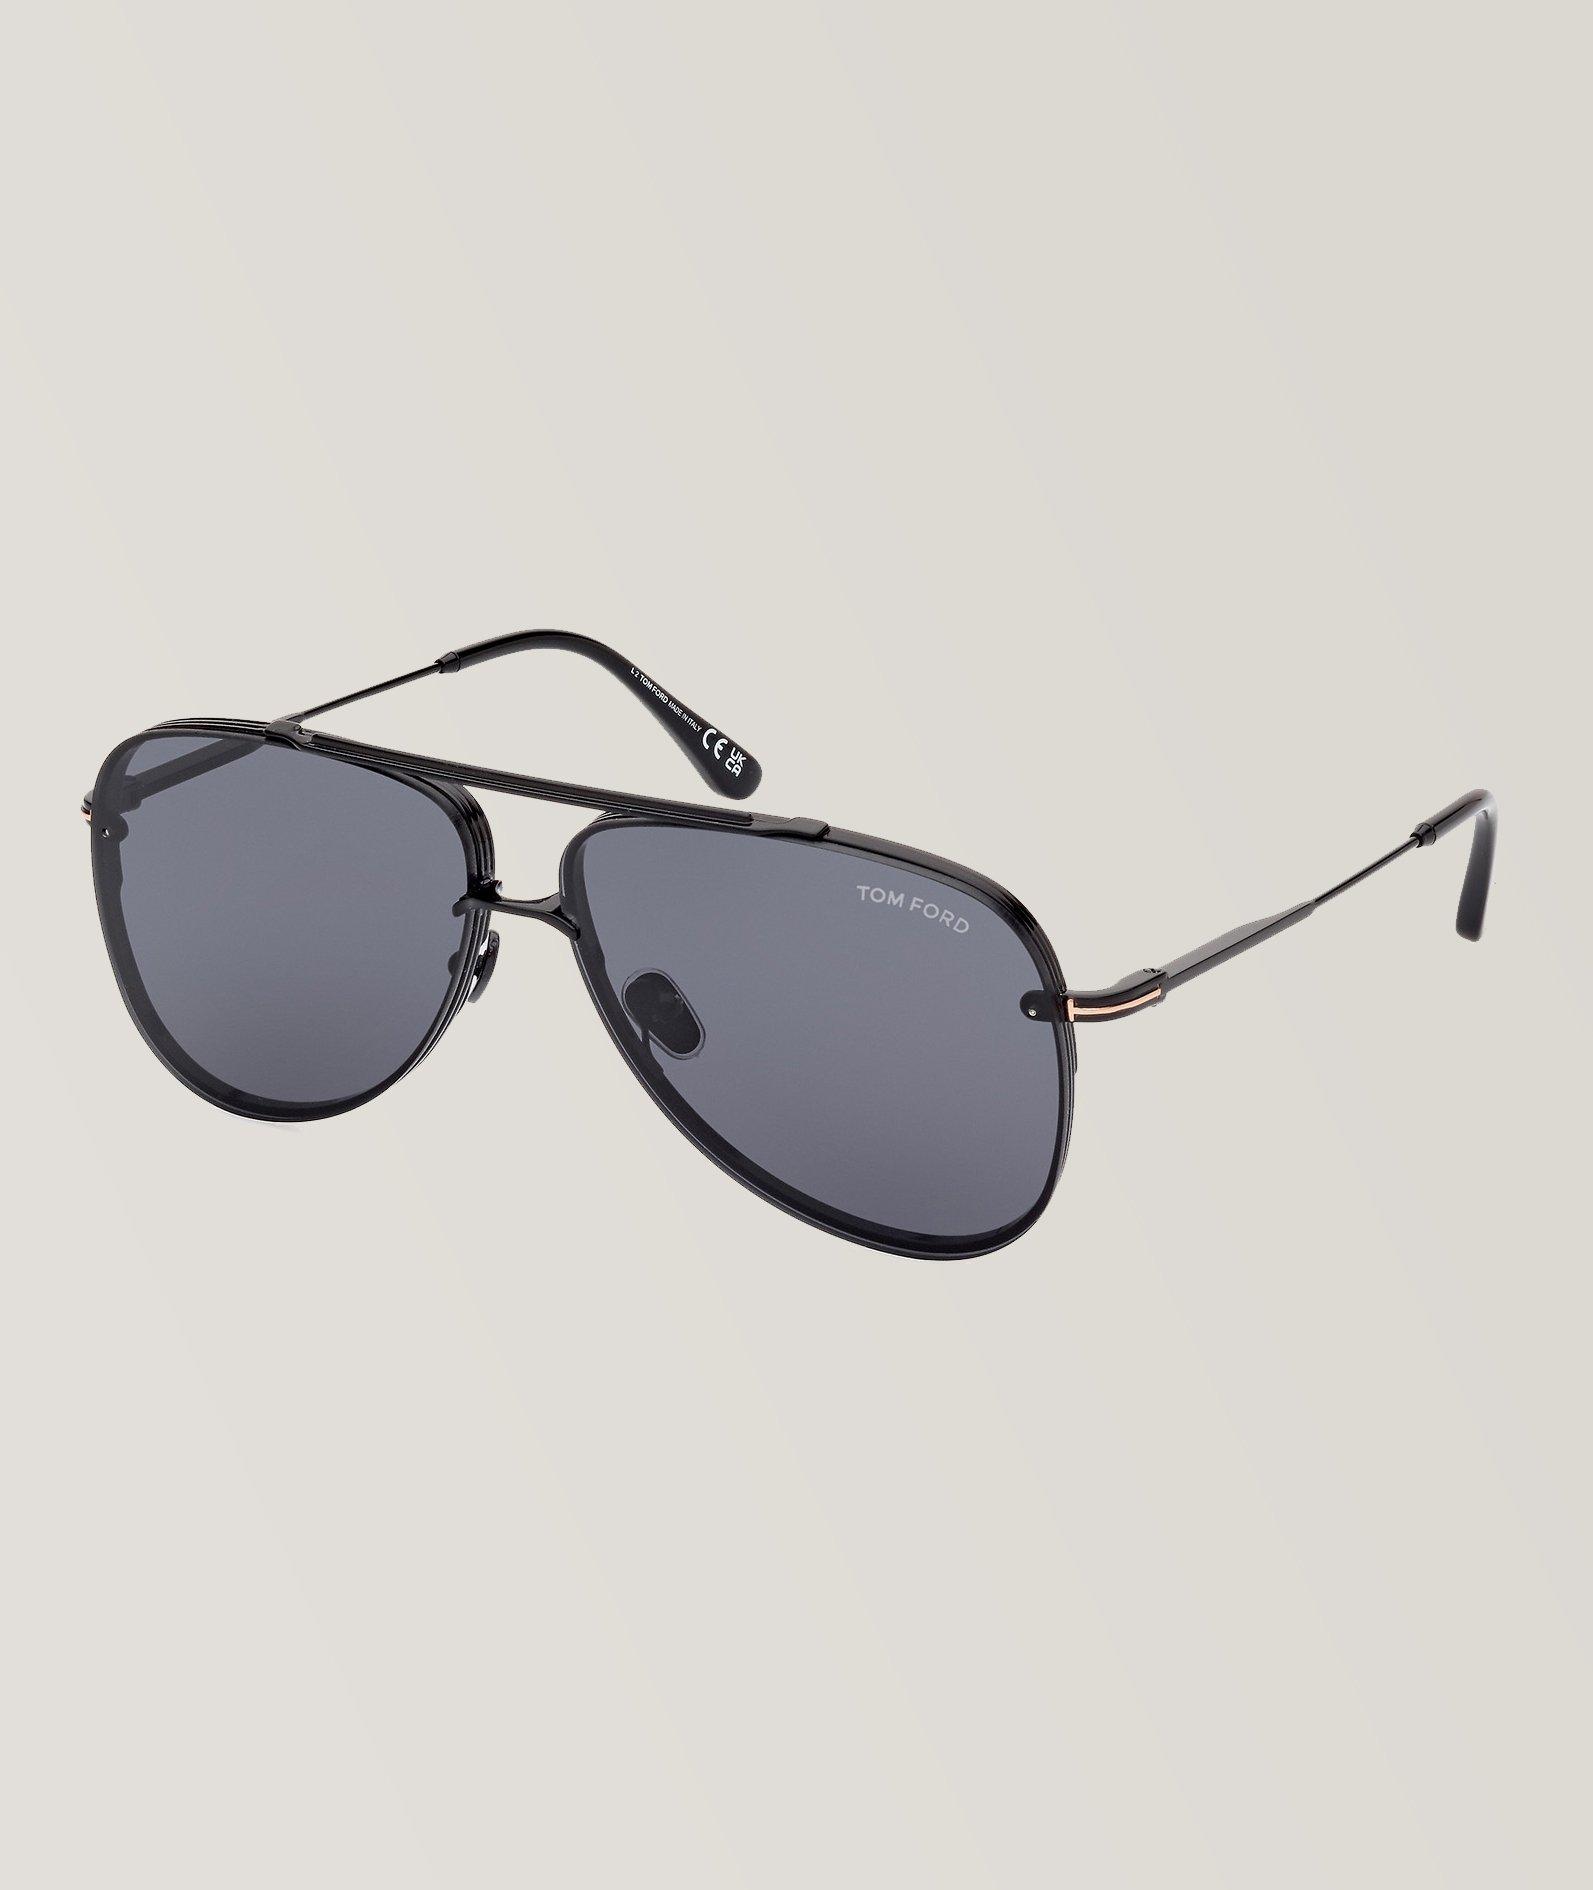 Leon Smoked Lenses Sunglasses image 0